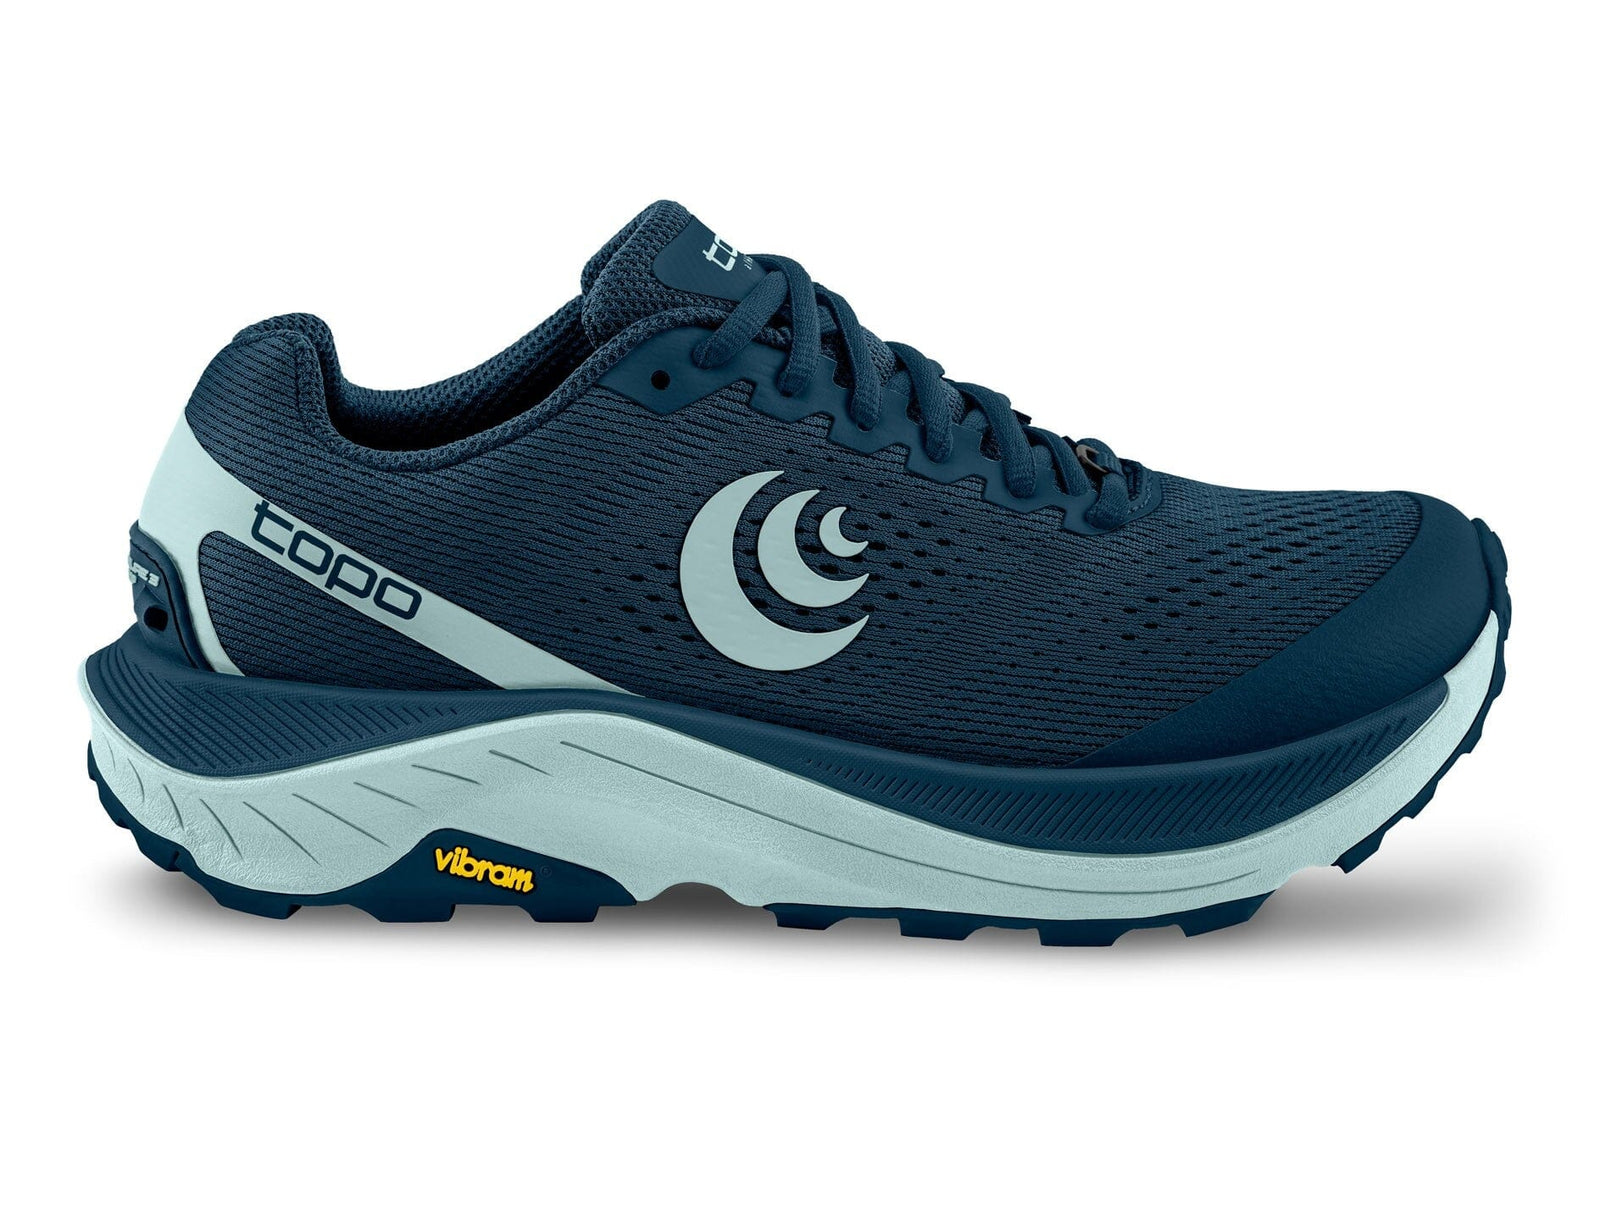 Topo Women's Ultraventure 3 Trail Running Shoes Navy/Blue US 6.5 